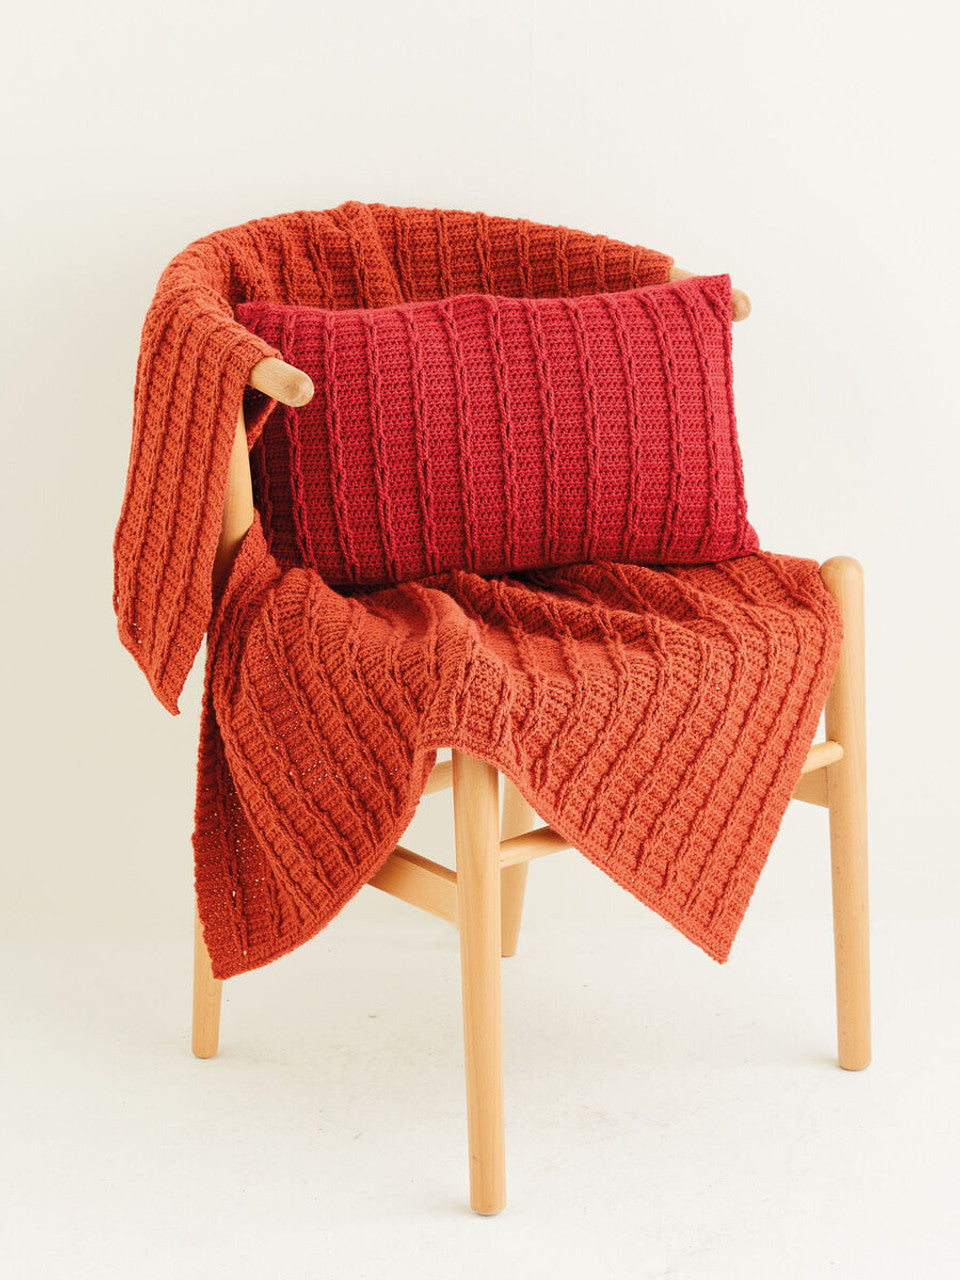 Sirdar 10305 Blanket and Cushion Crochet Pattern